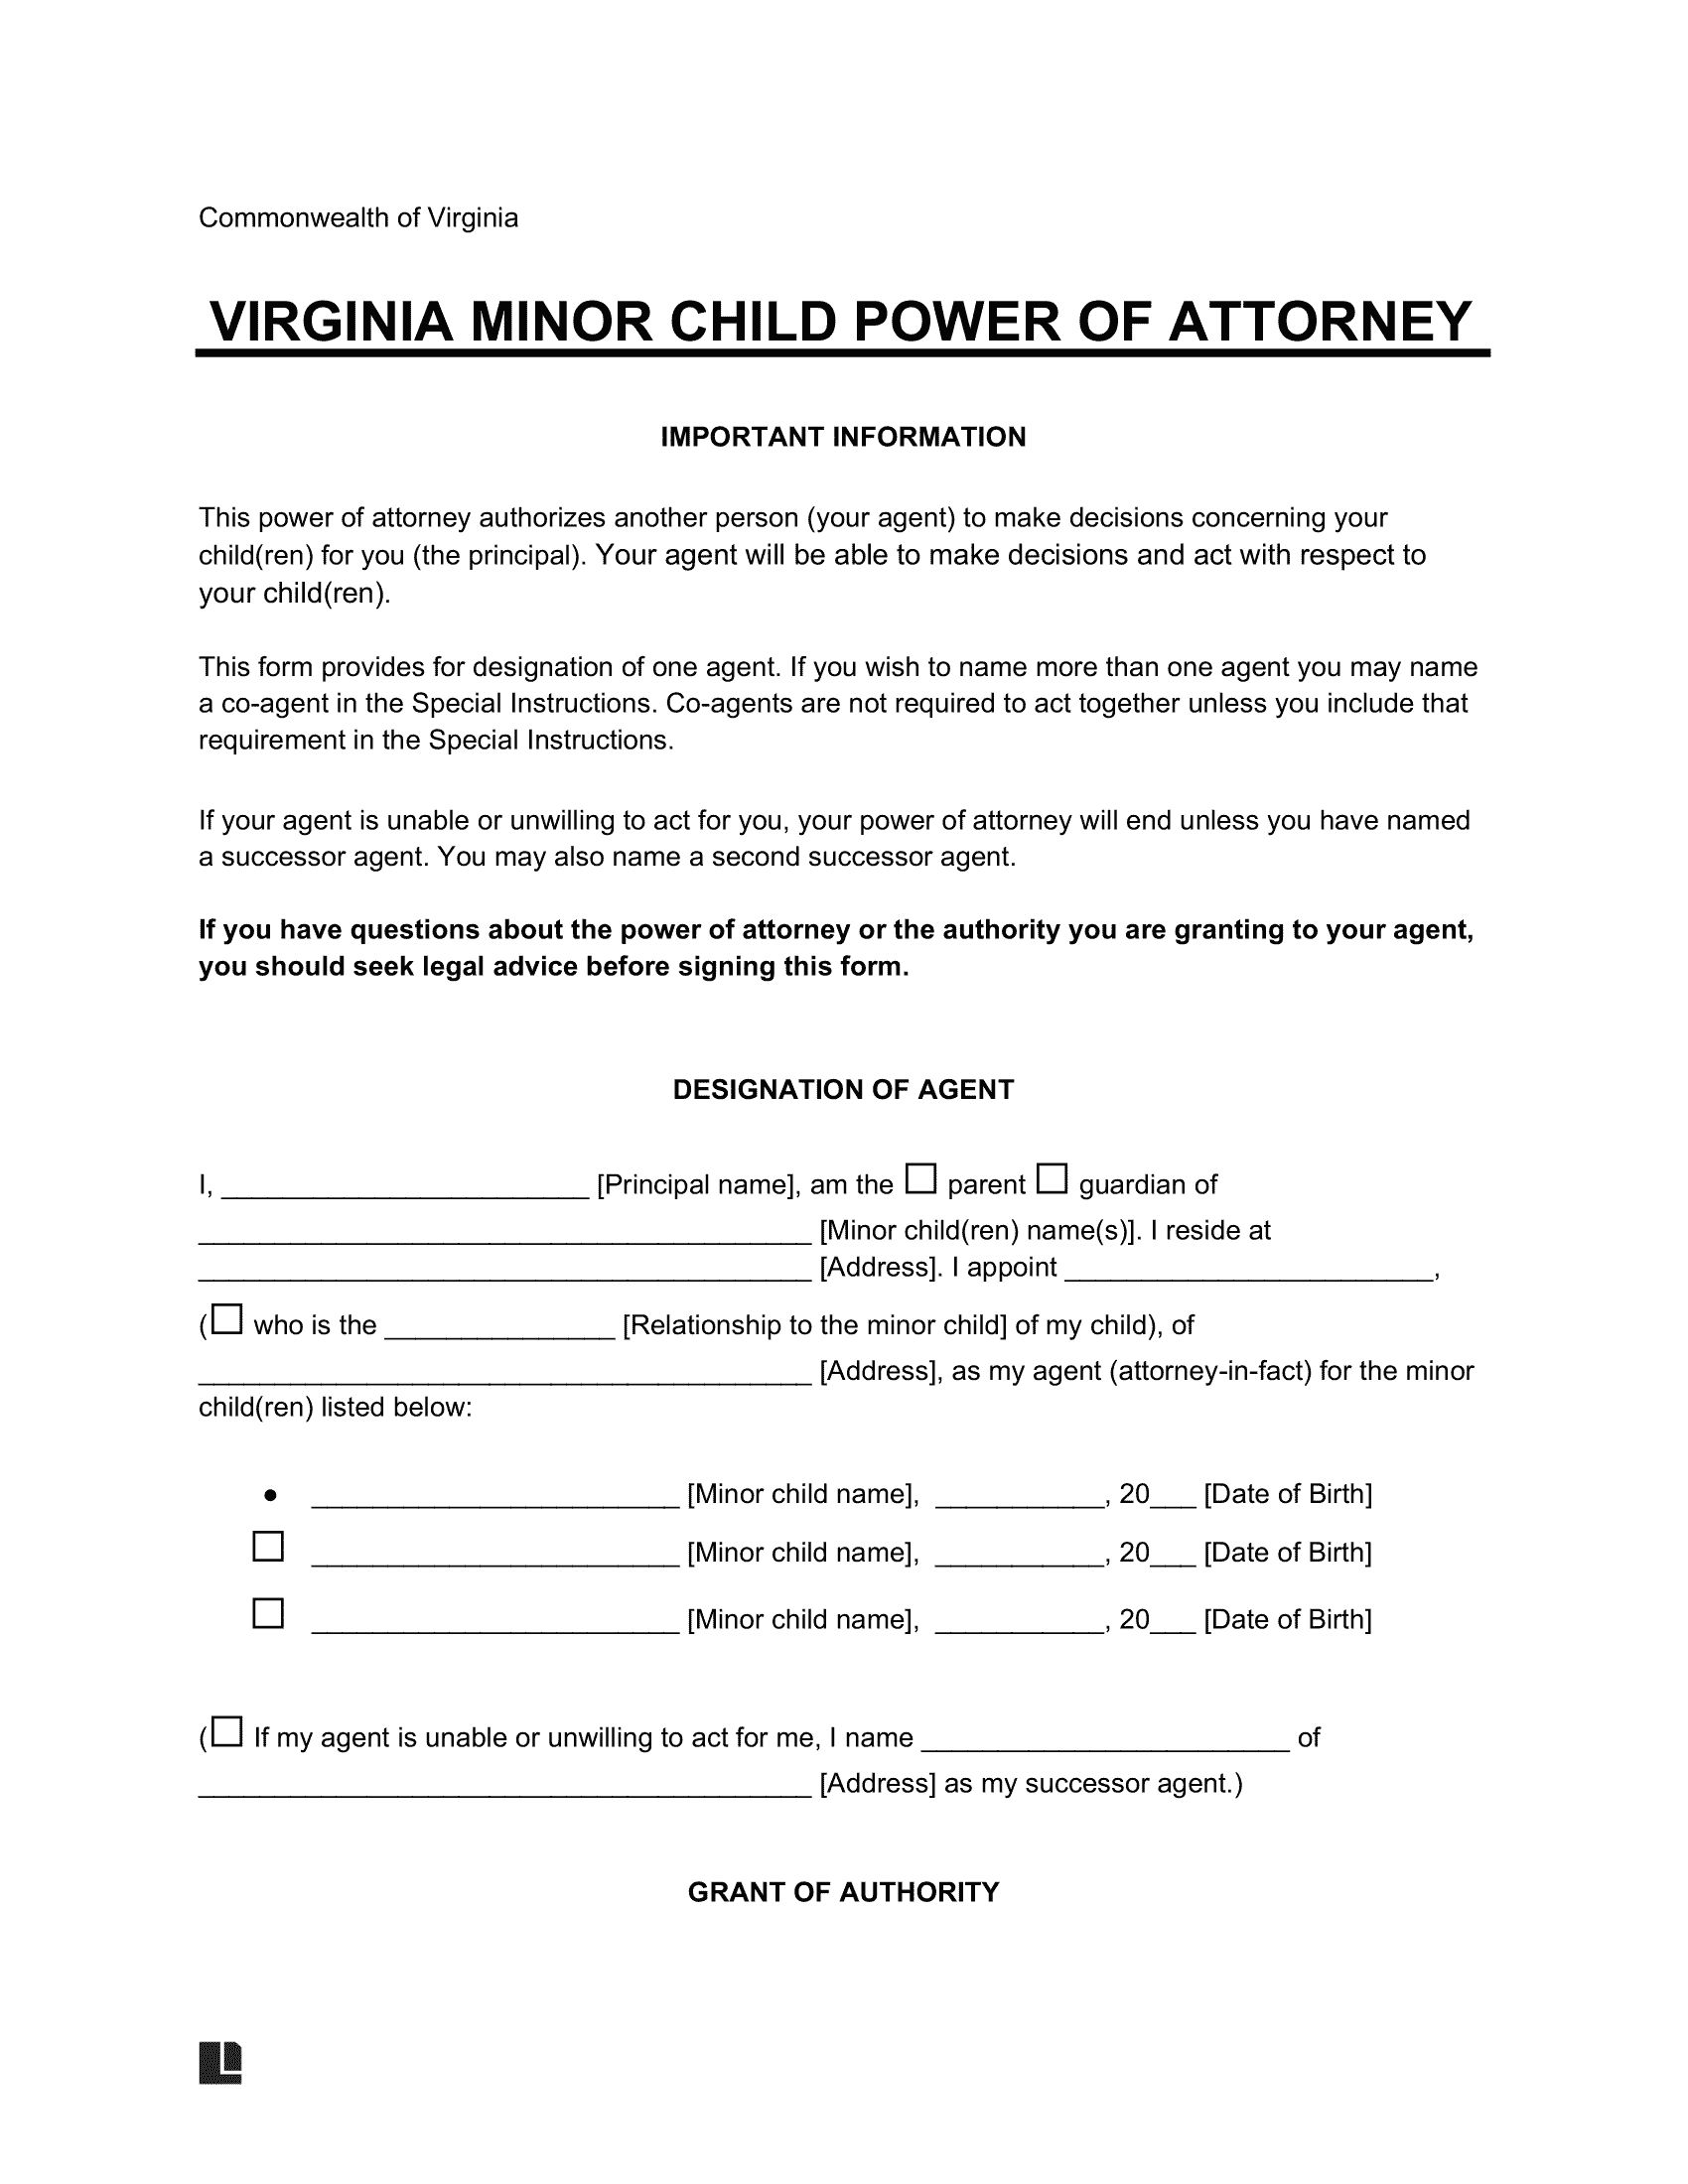 Virginia Minor Child Power of Attorney Form